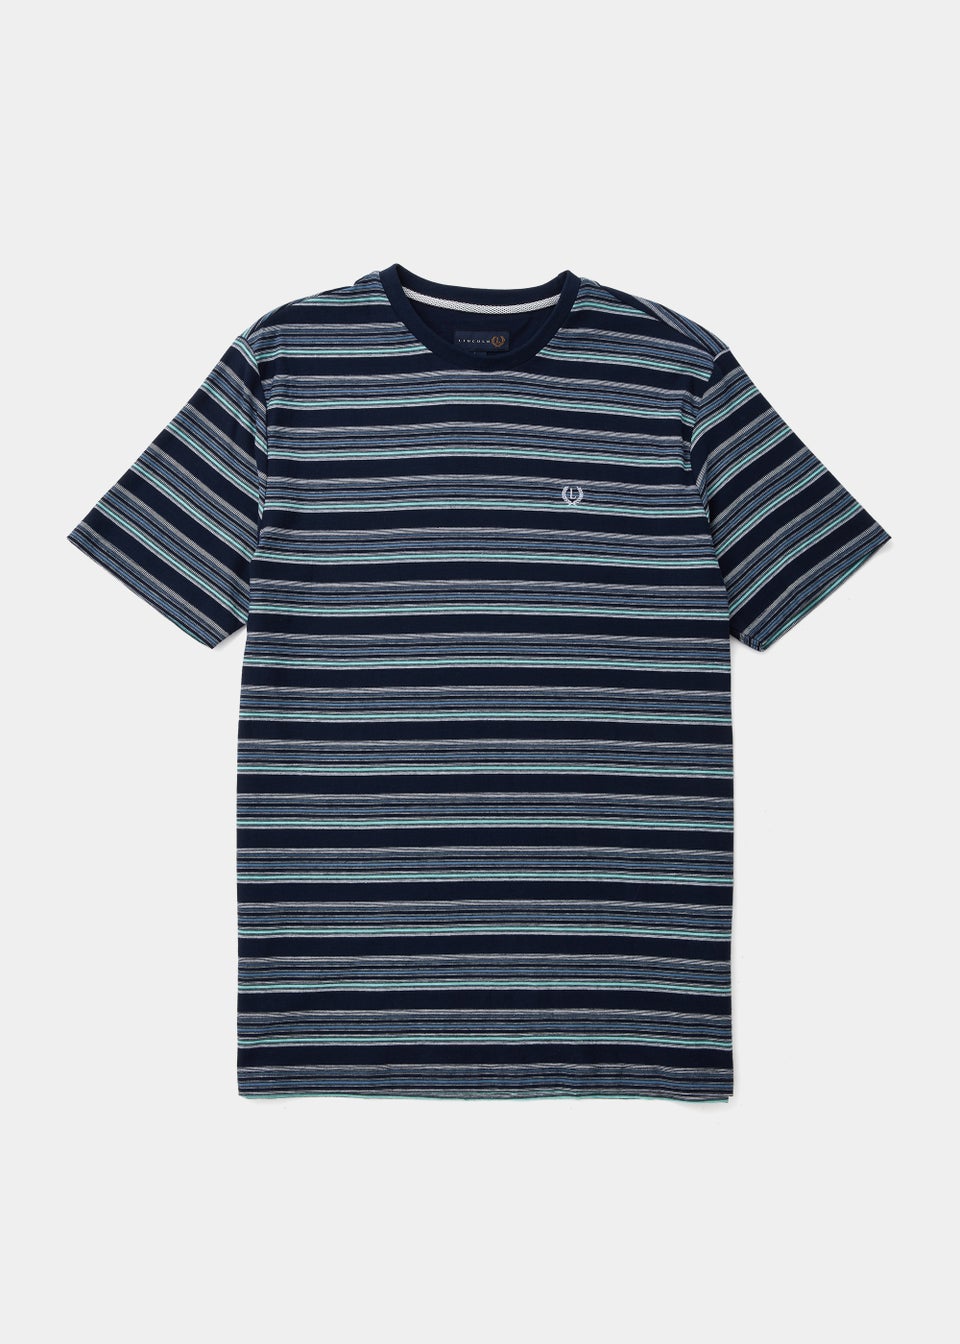 Lincoln Navy Stripe Textured T-Shirt - Matalan